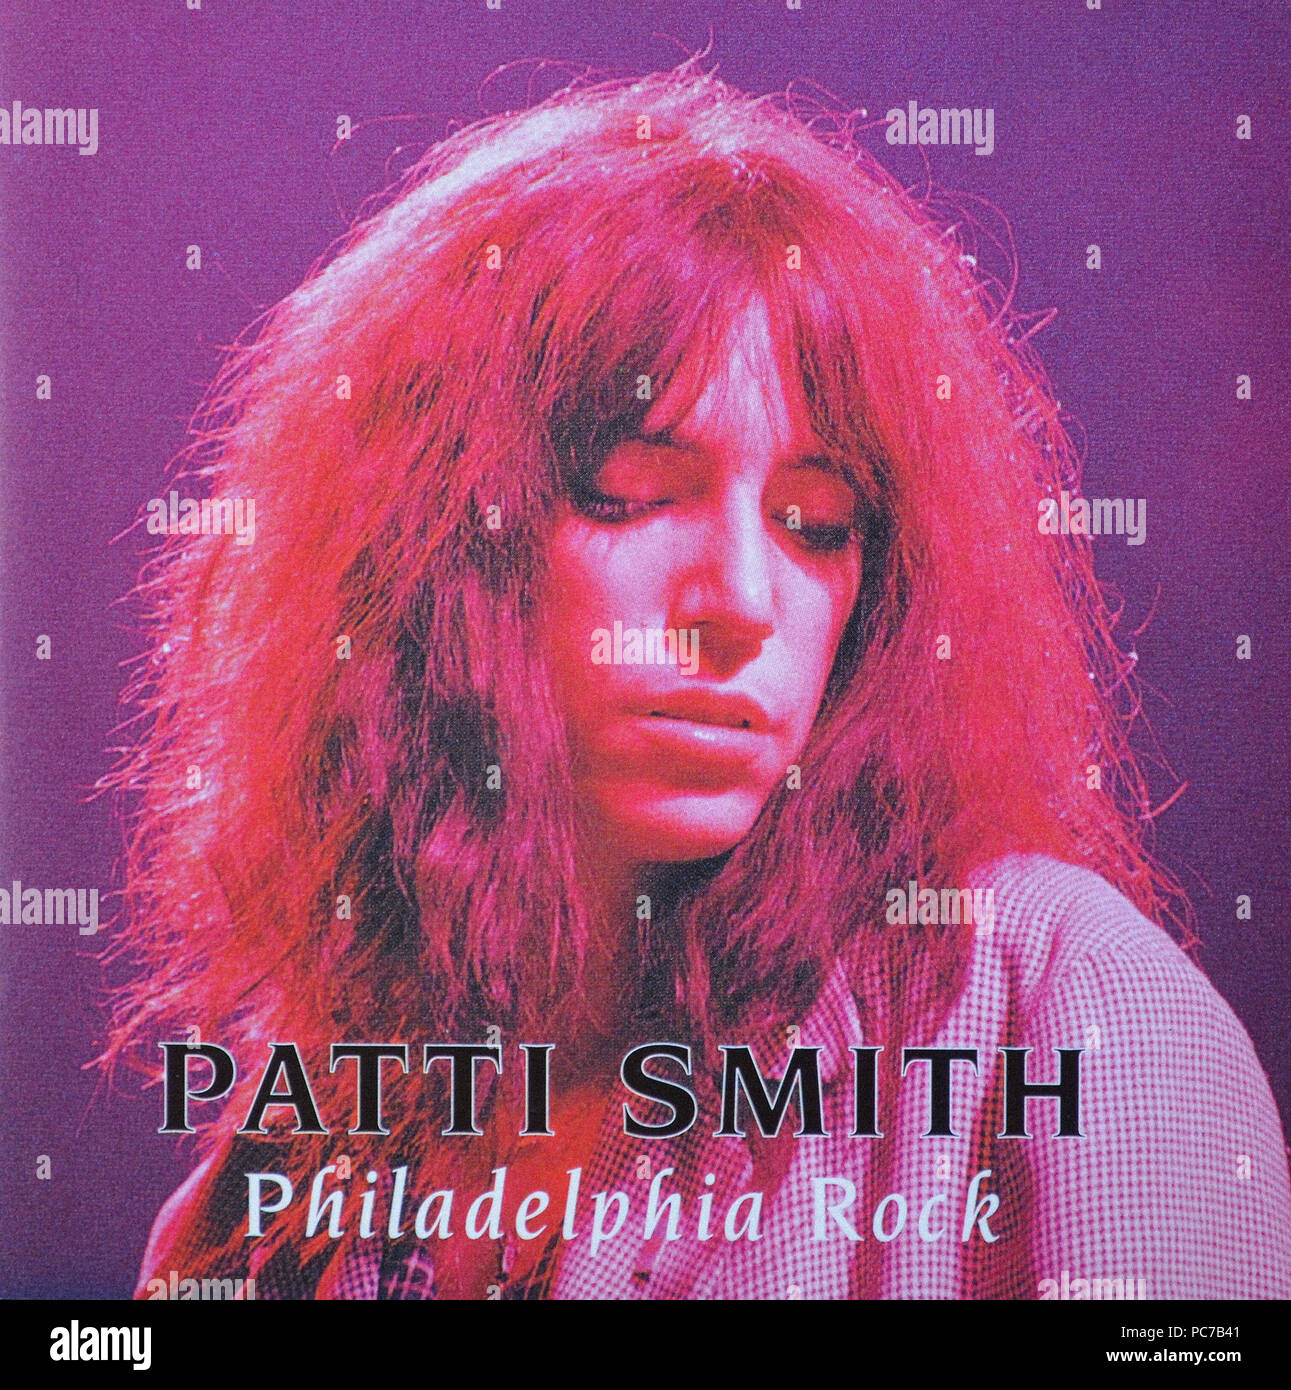 Patti Smith   -  Philadelphia Rock  -  Vintage vinyl album cover Stock Photo